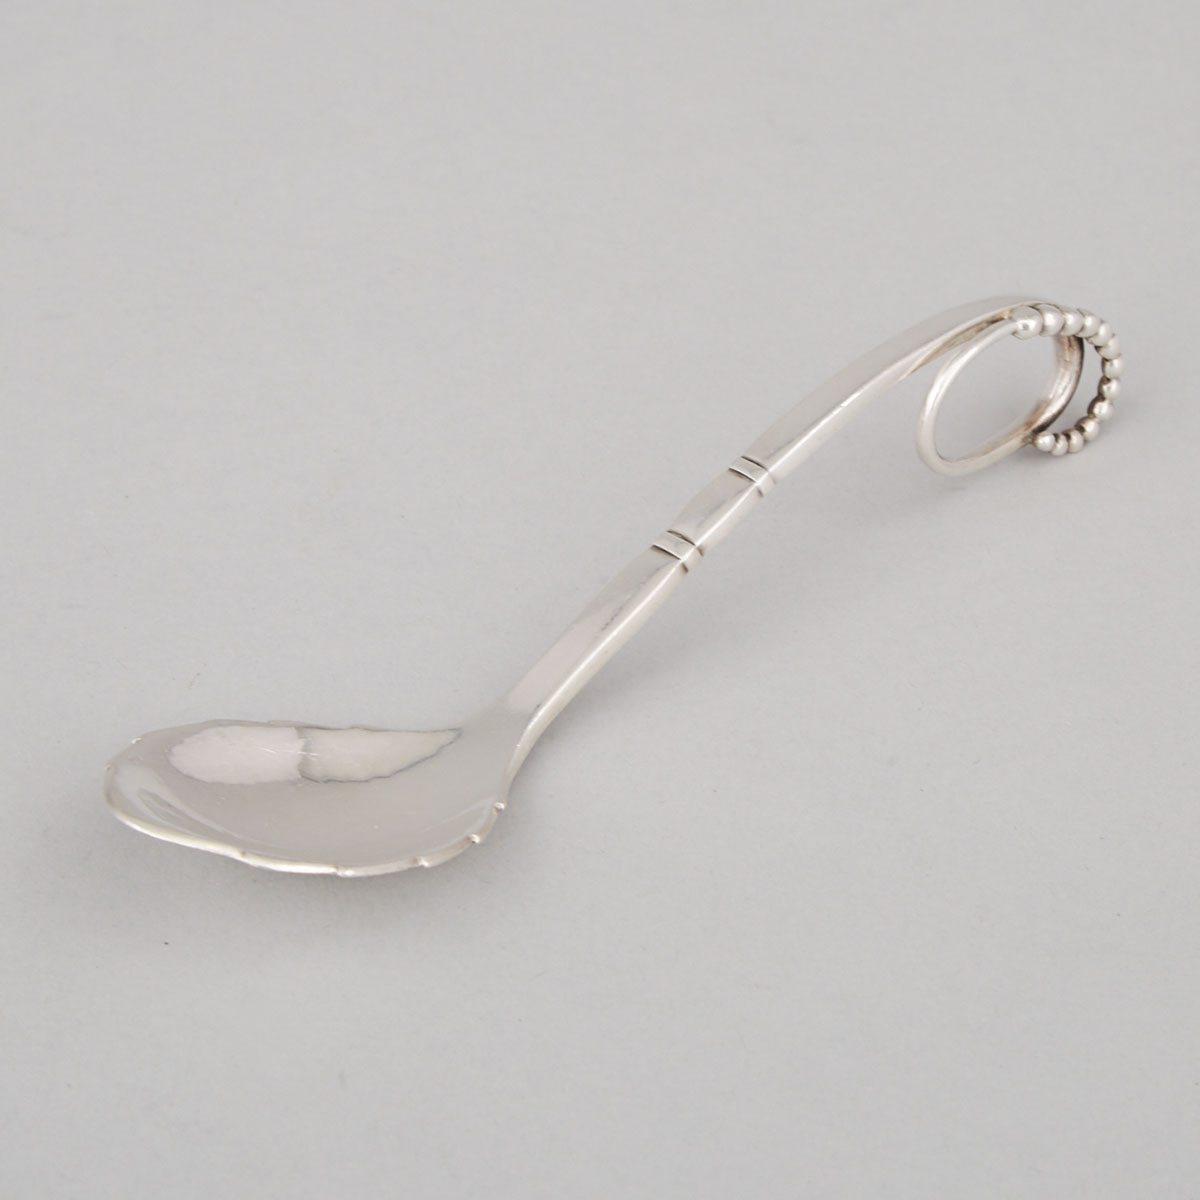 Danish Silver Spoon, #41, Georg Jensen, Copenhagen, c.1920-25